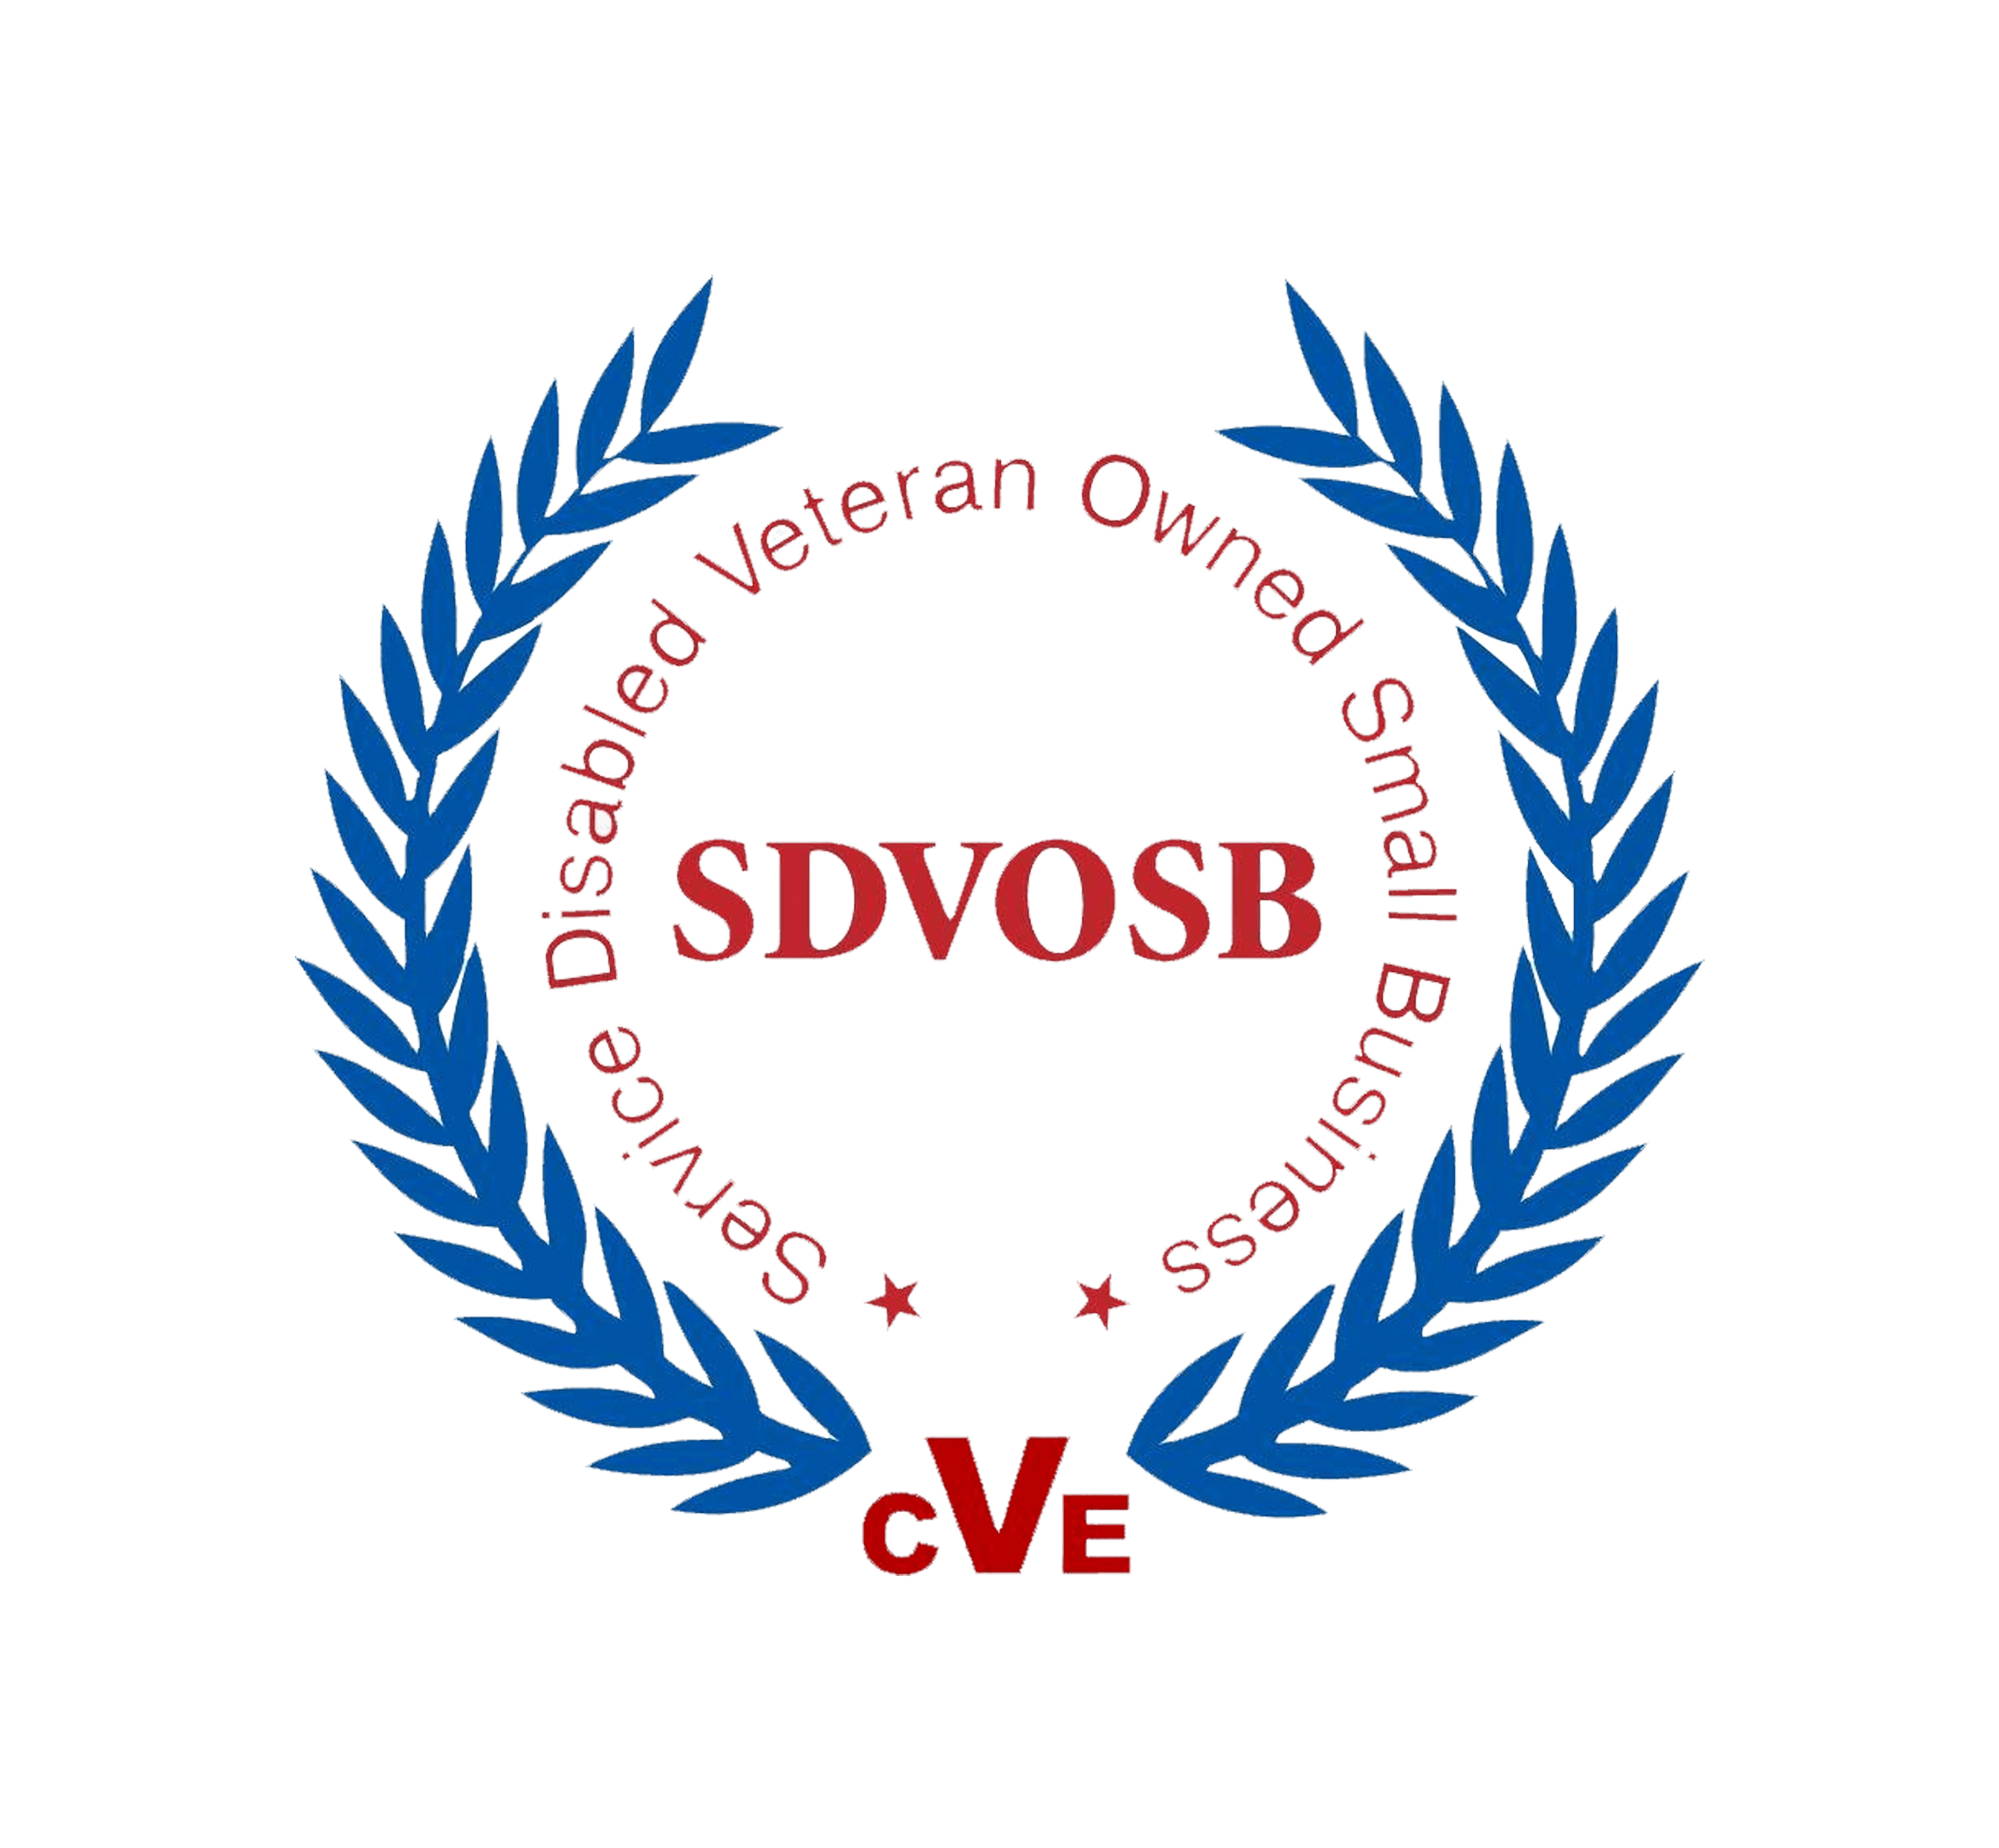 The SDVOSB logo